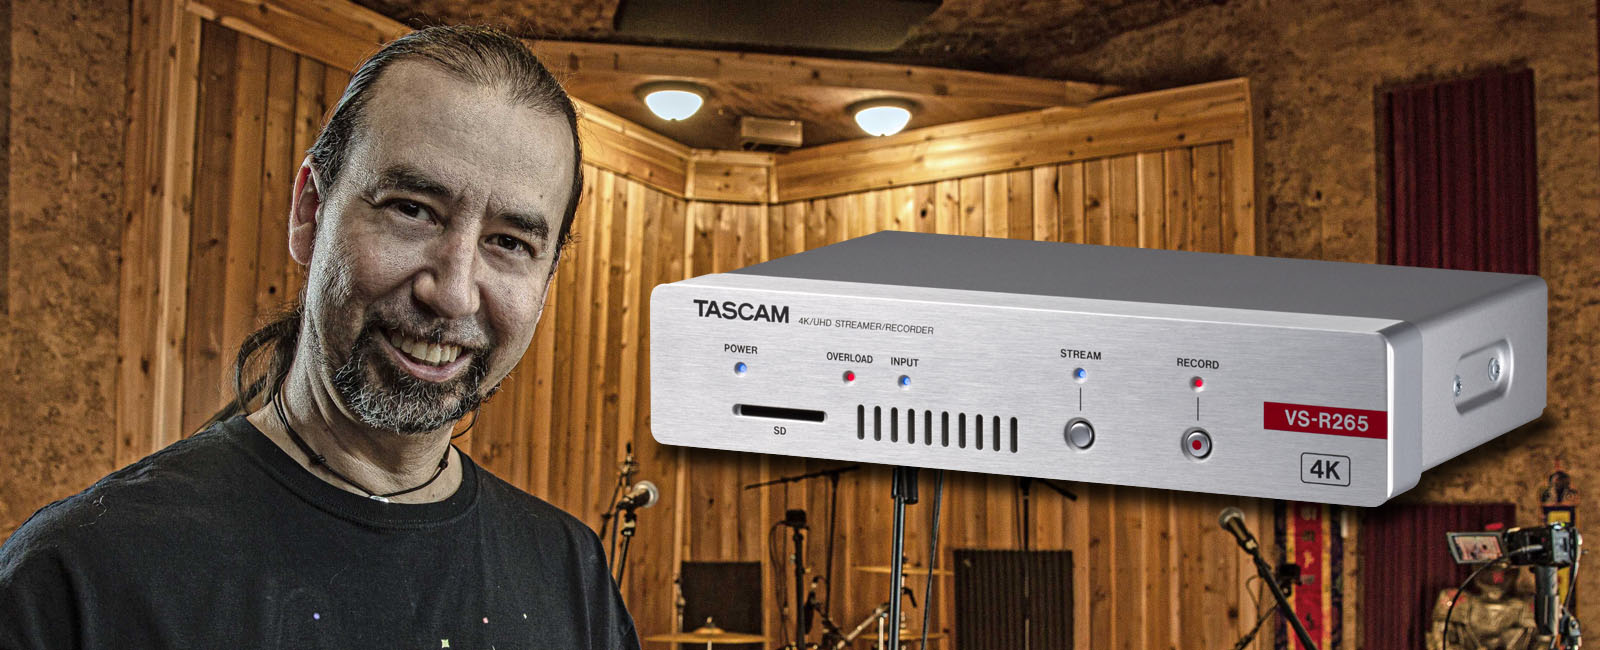 The TASCAM VS-R265 4K/UHD Streamer/Recorder Helps Del Castillo Livestream Globally